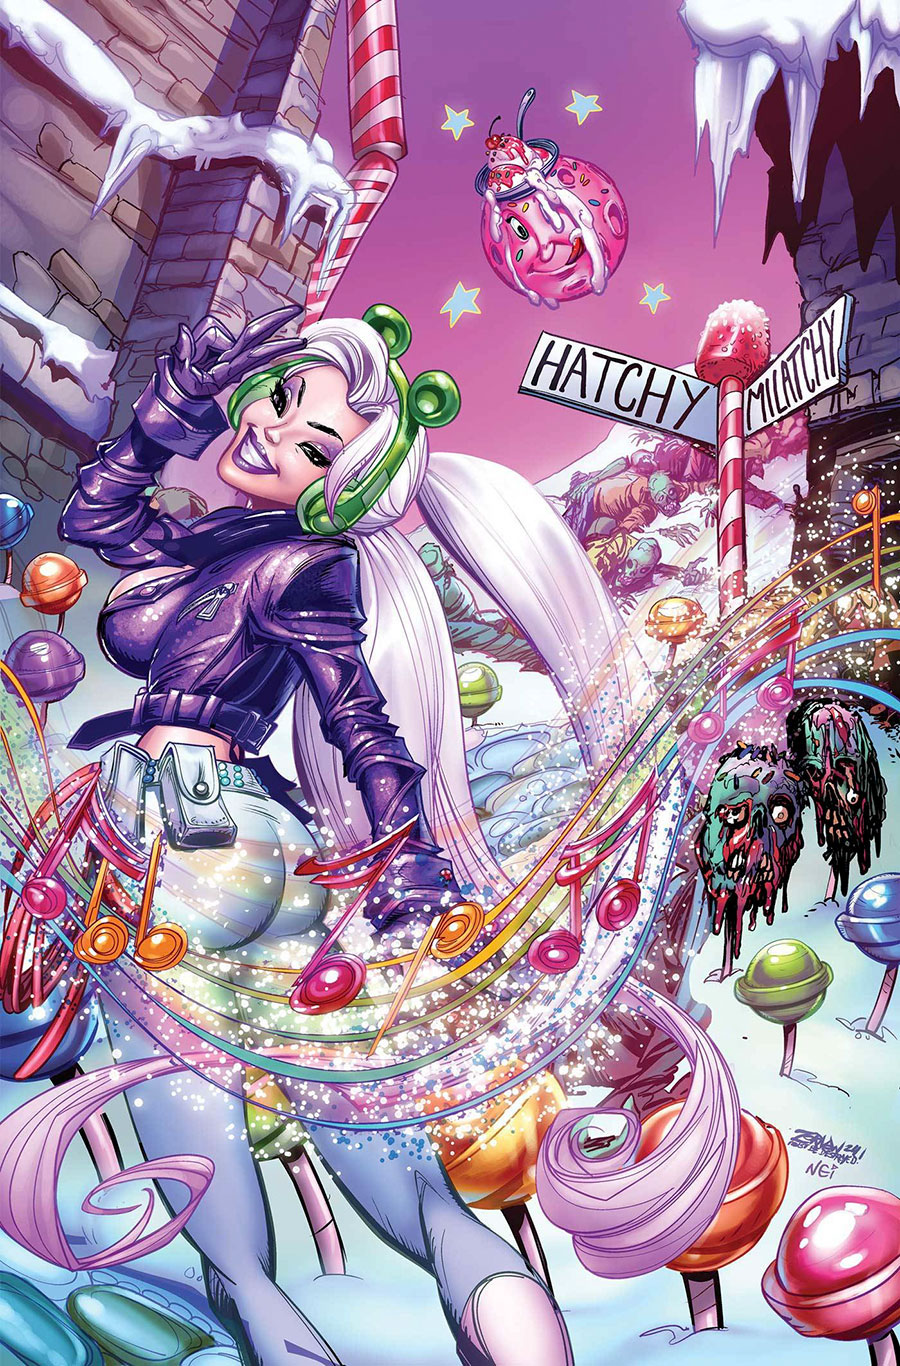 Sweetie Candy Vigilante Vol 2 #1 Cover O Incentive Jeff Zornow Hatchy Milatchy Virgin Cover